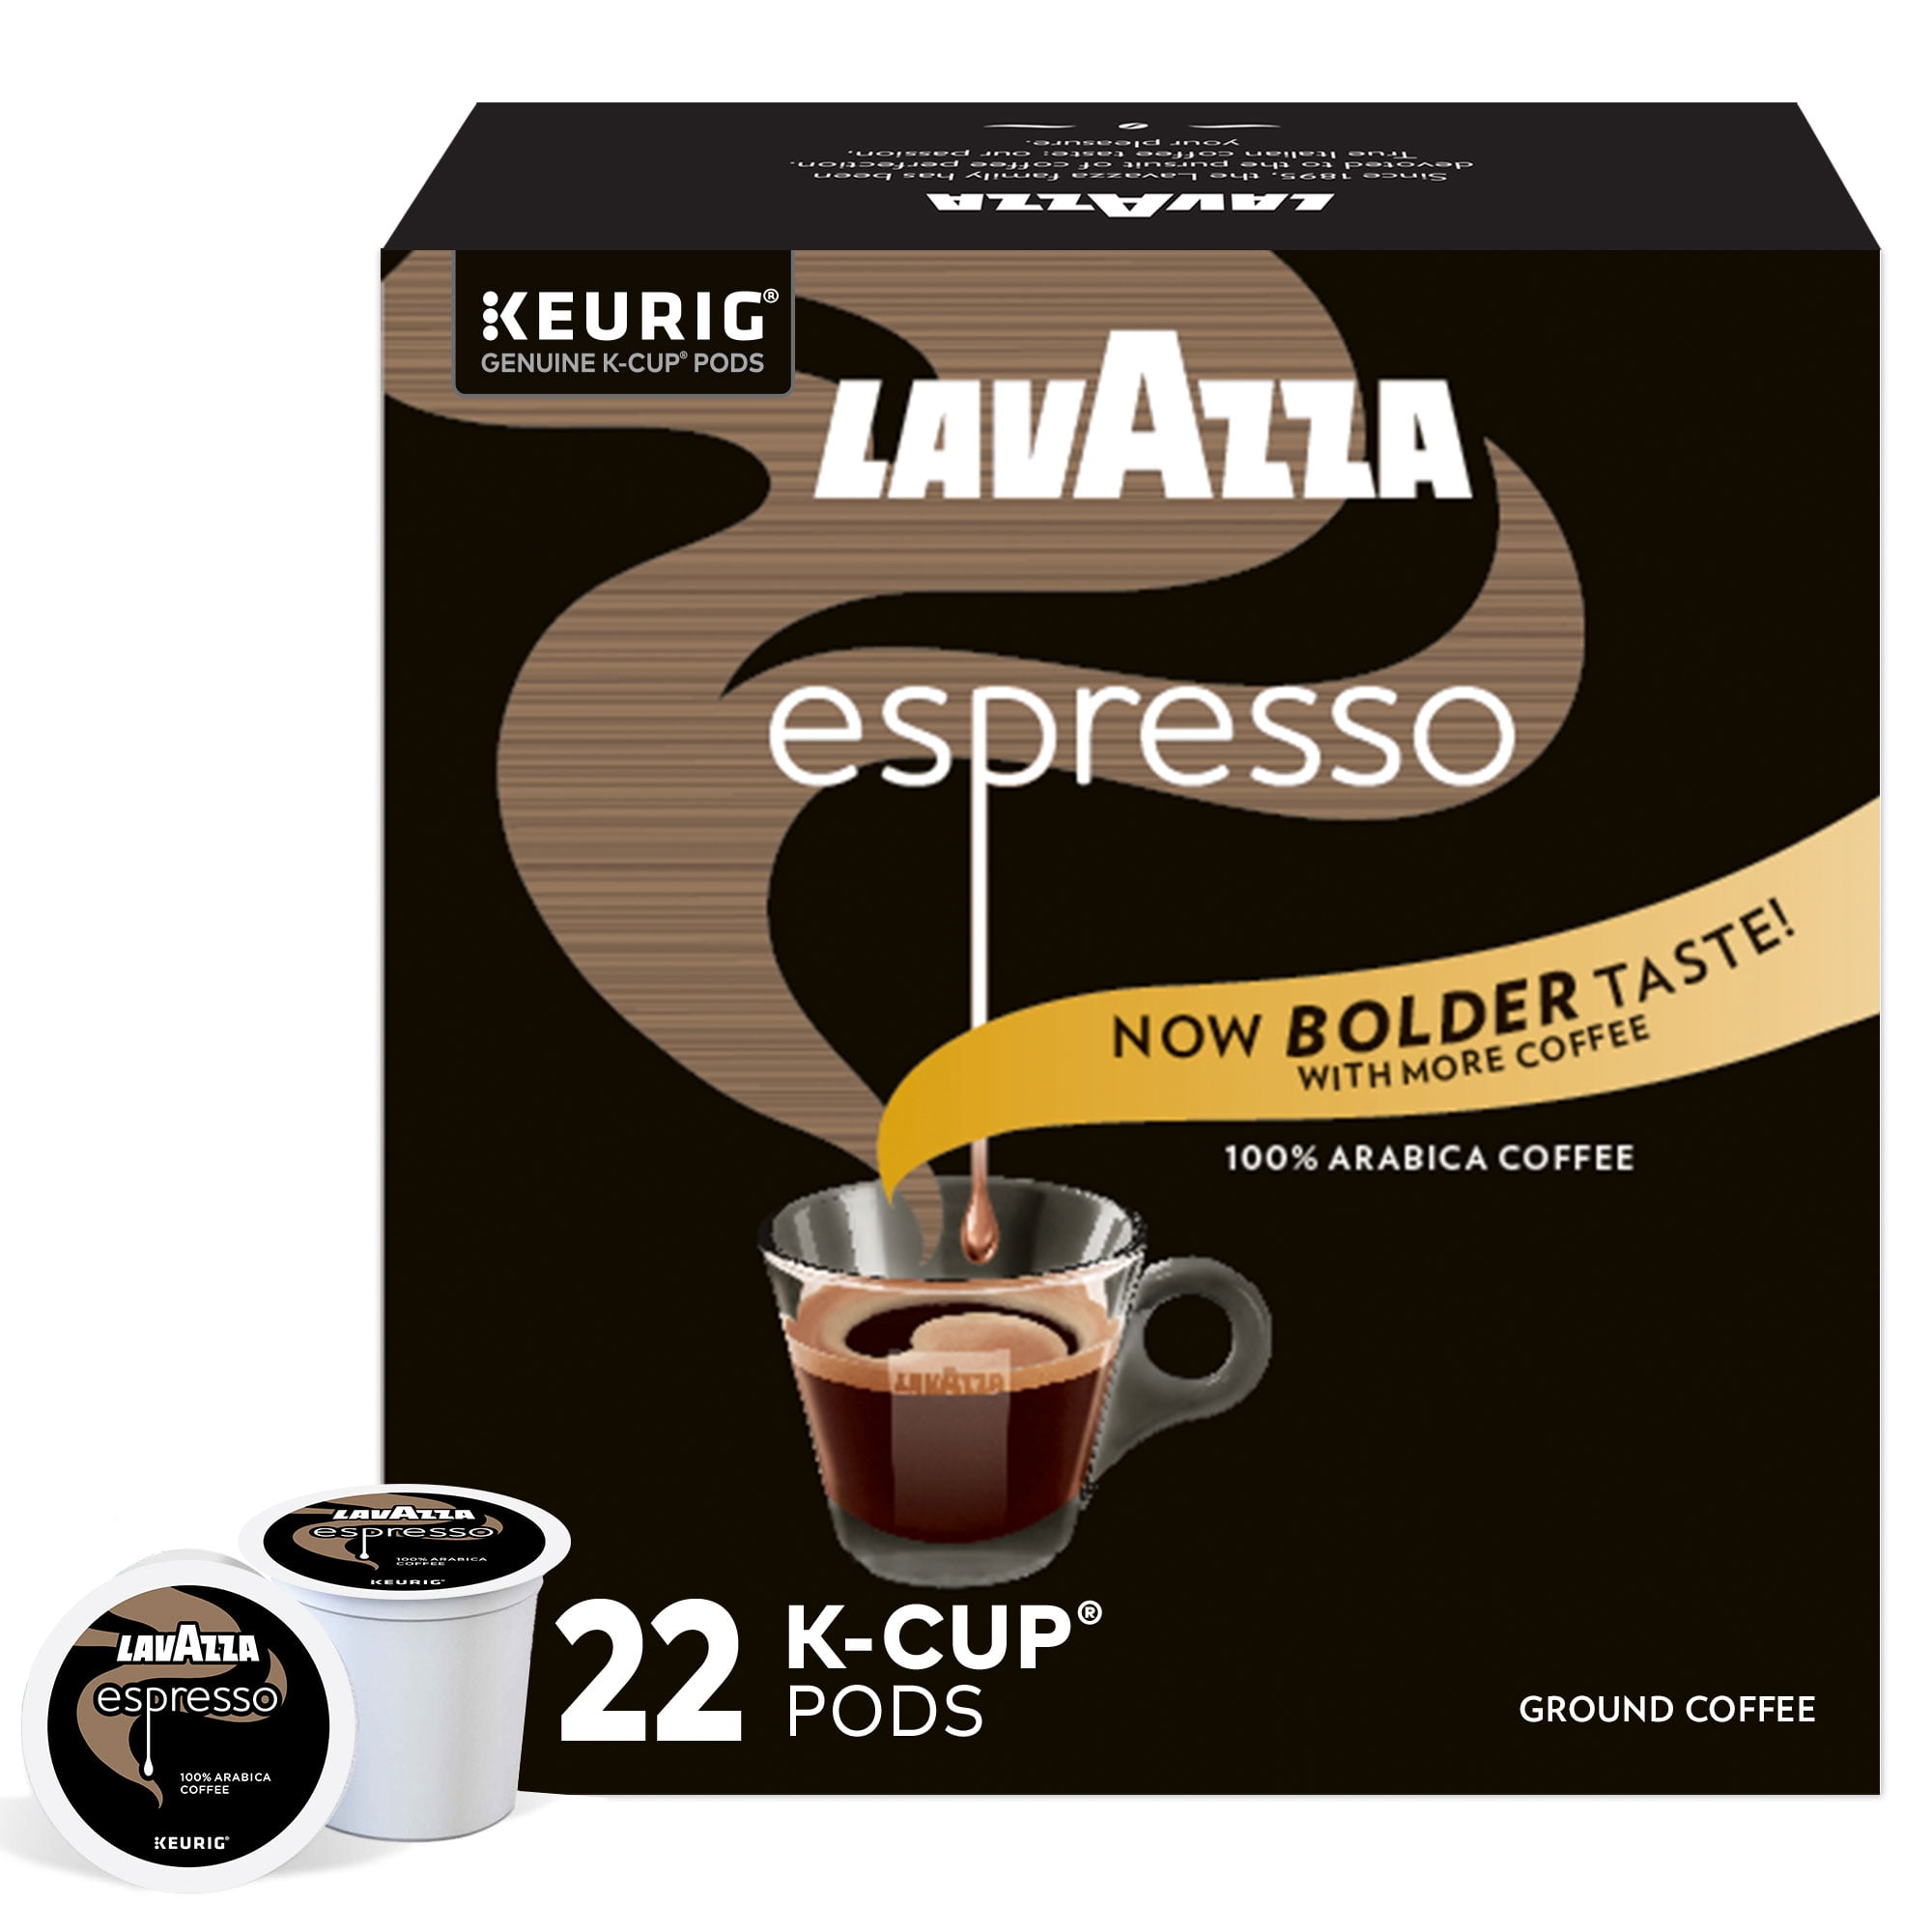 Mixpresso RNAB0BR5LJ2F2 mixpresso single serve coffee brewer k-cup